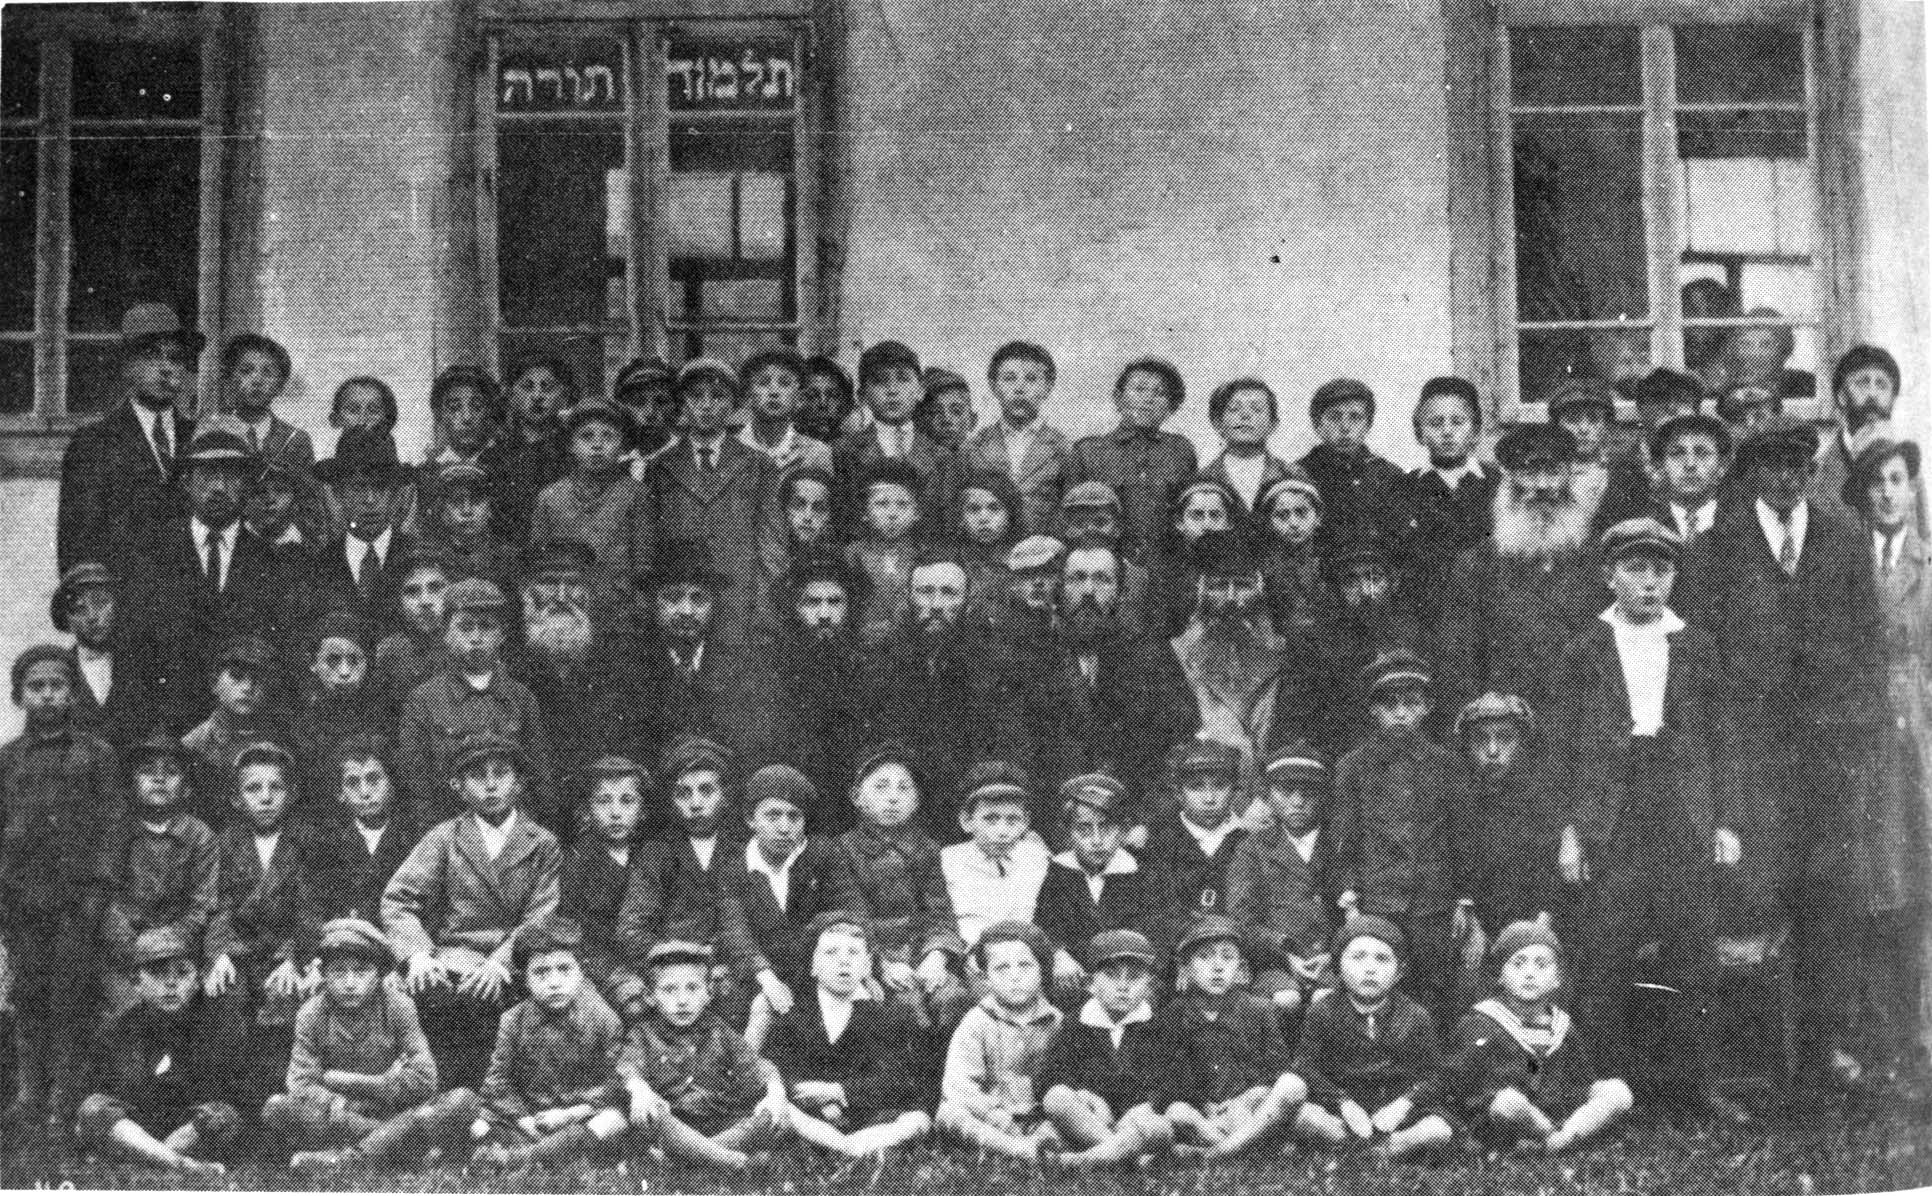 Children of the talmud torah school in Zofjowka, photograph taken in 1934/1935.